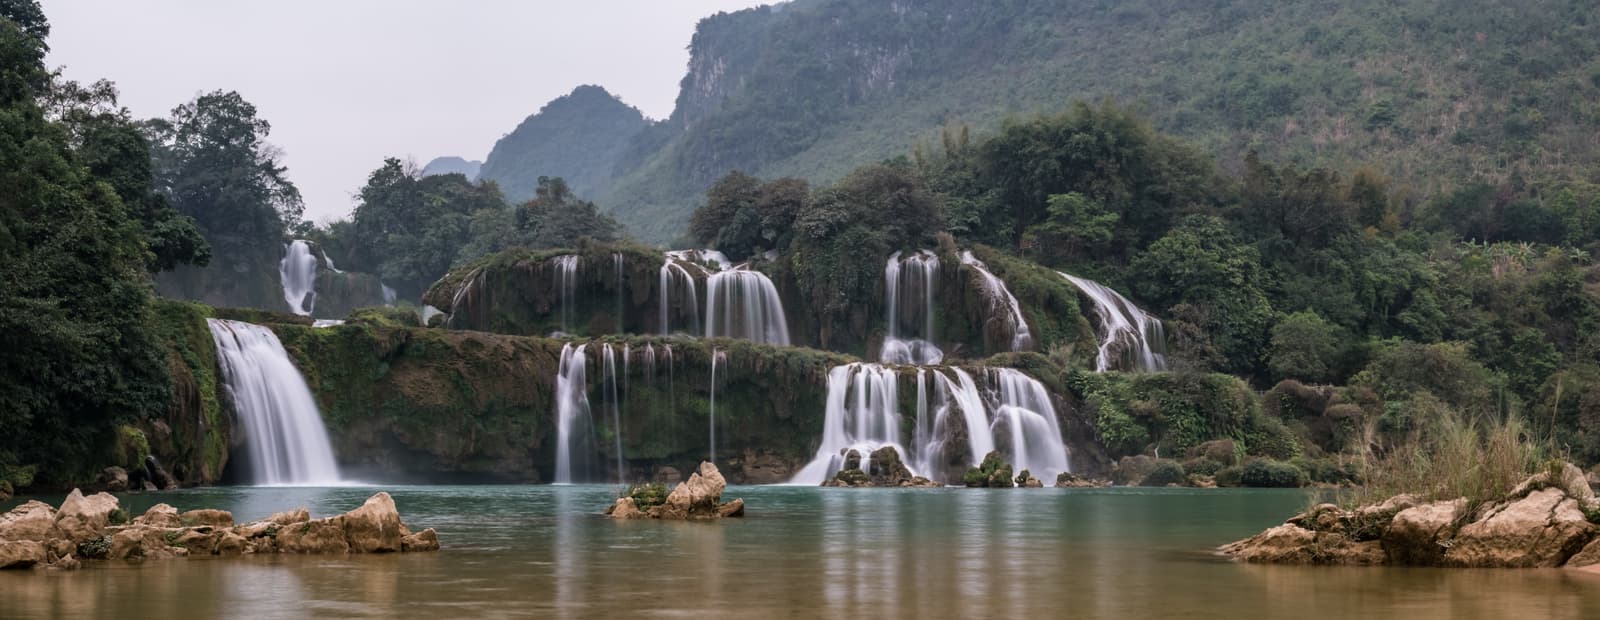 Bản Giổc Waterfall, Cao Bằng Province, Vietnam